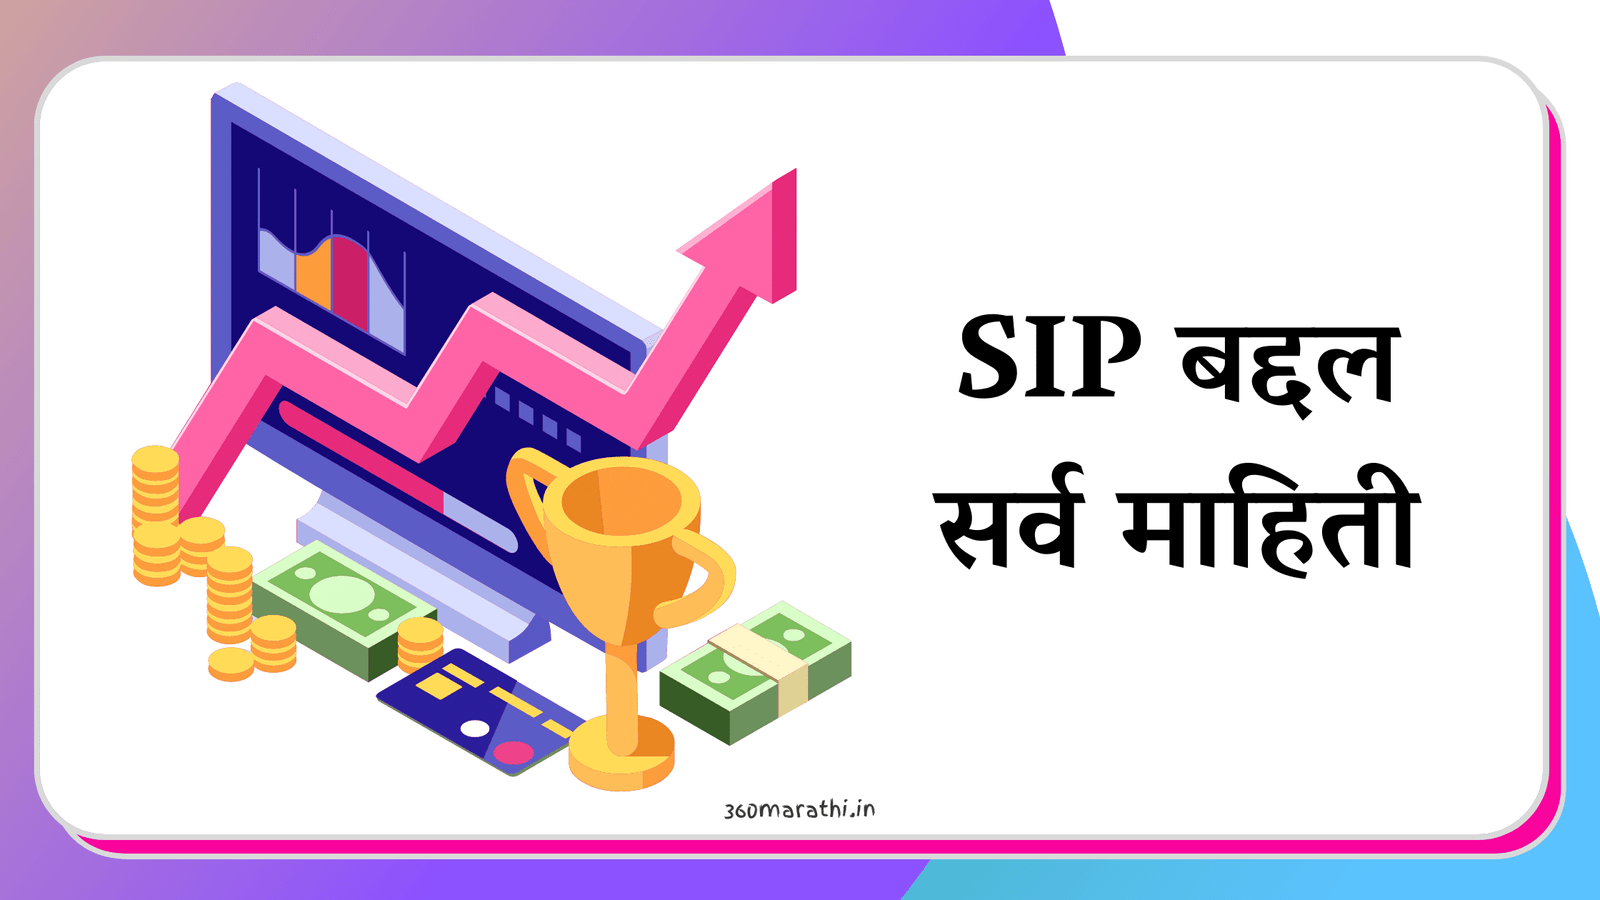 SIP information in Marathi